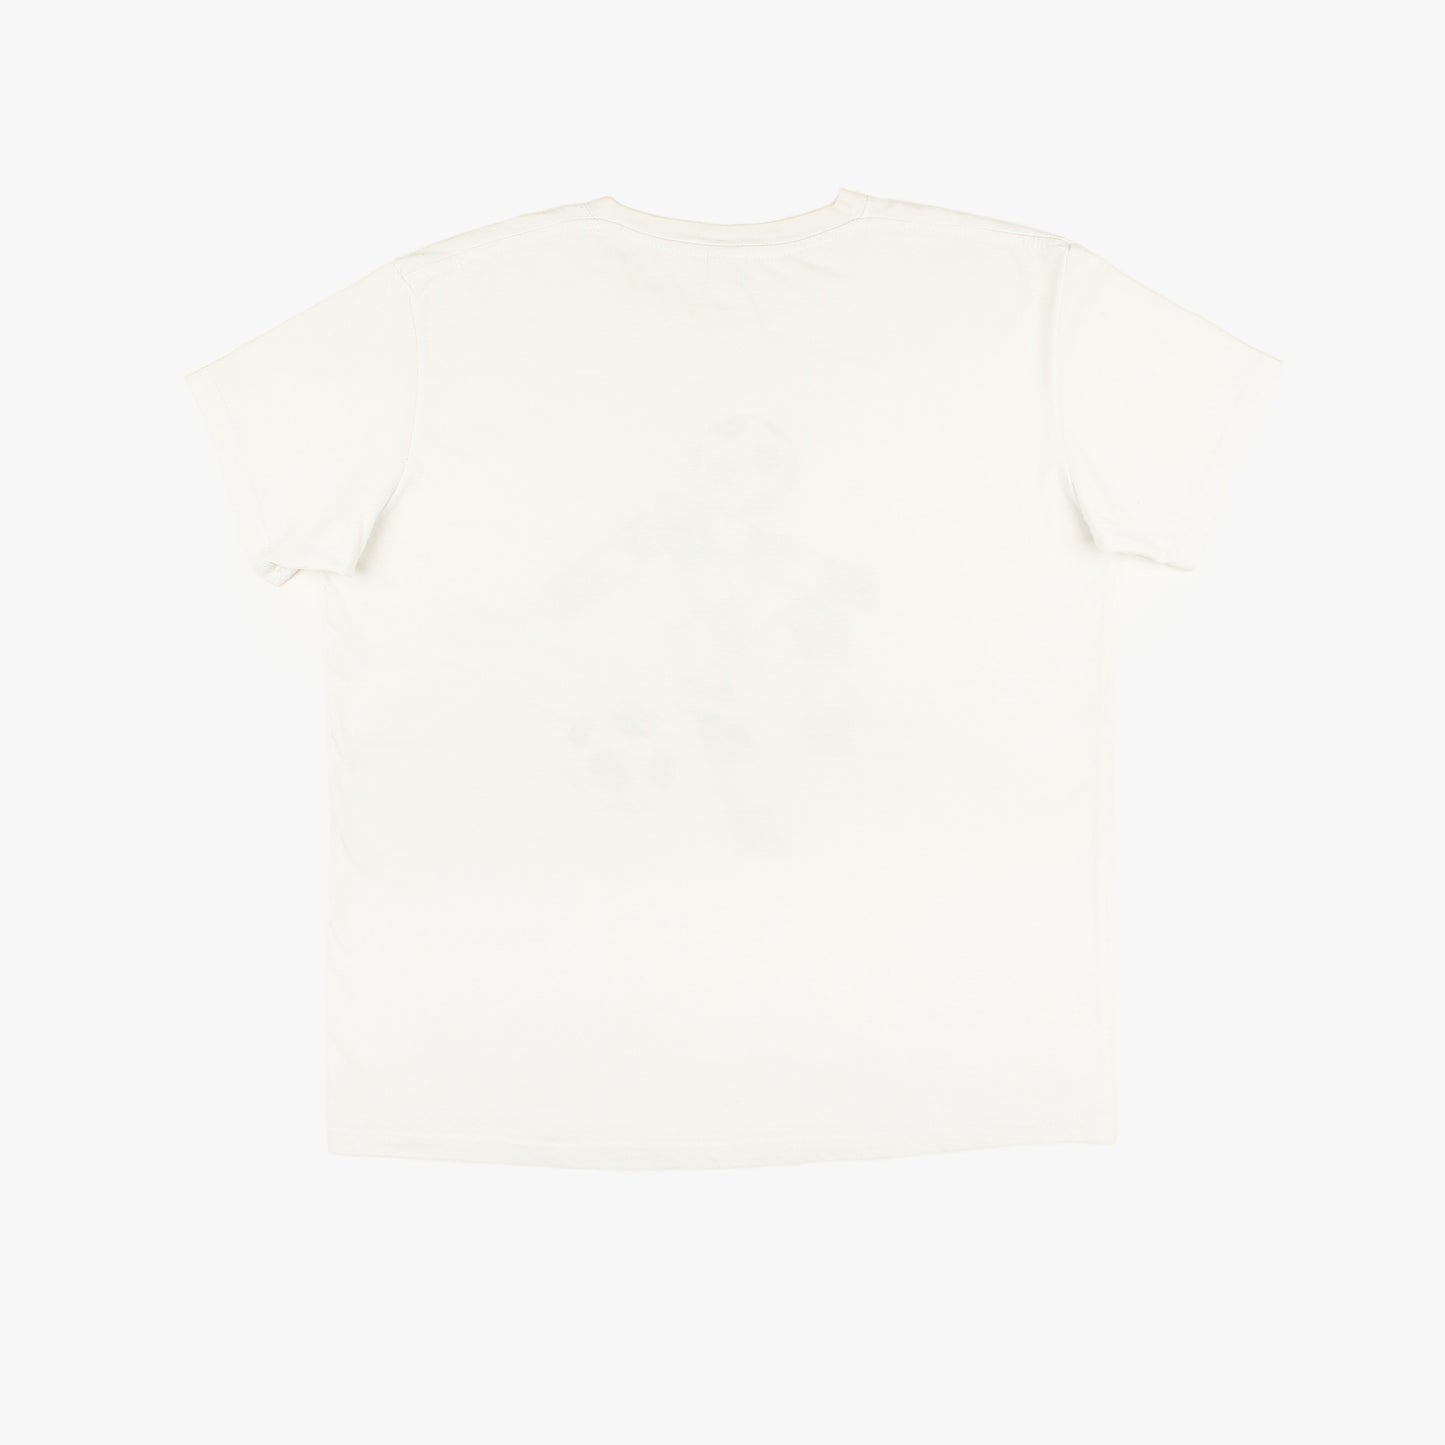 Italia 90 • Official Merchandise T-Shirt • XL